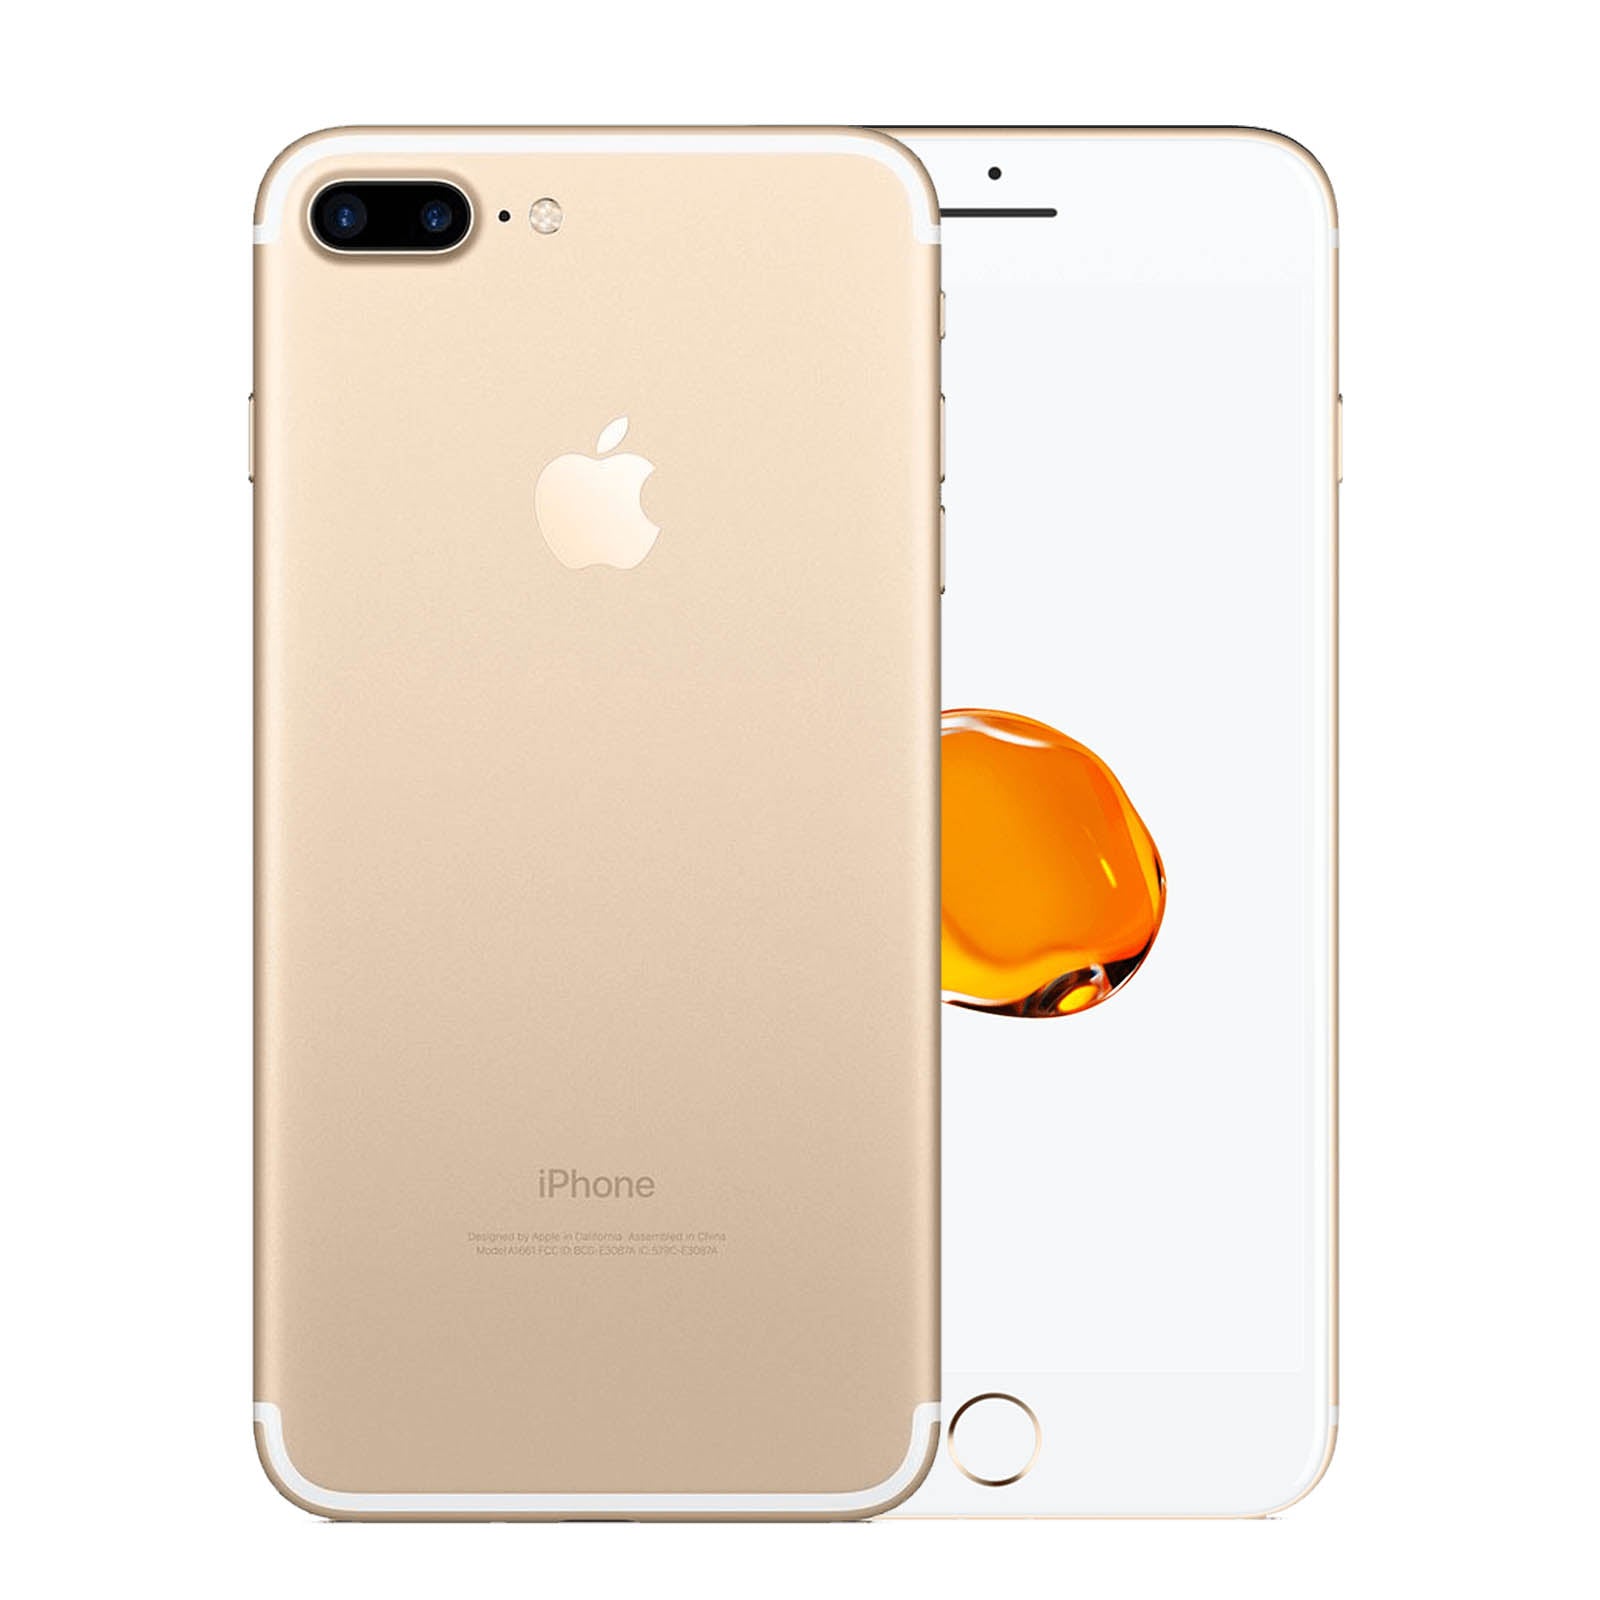 Apple iPhone 7 Plus 32GB Gold Very Good - Unlocked